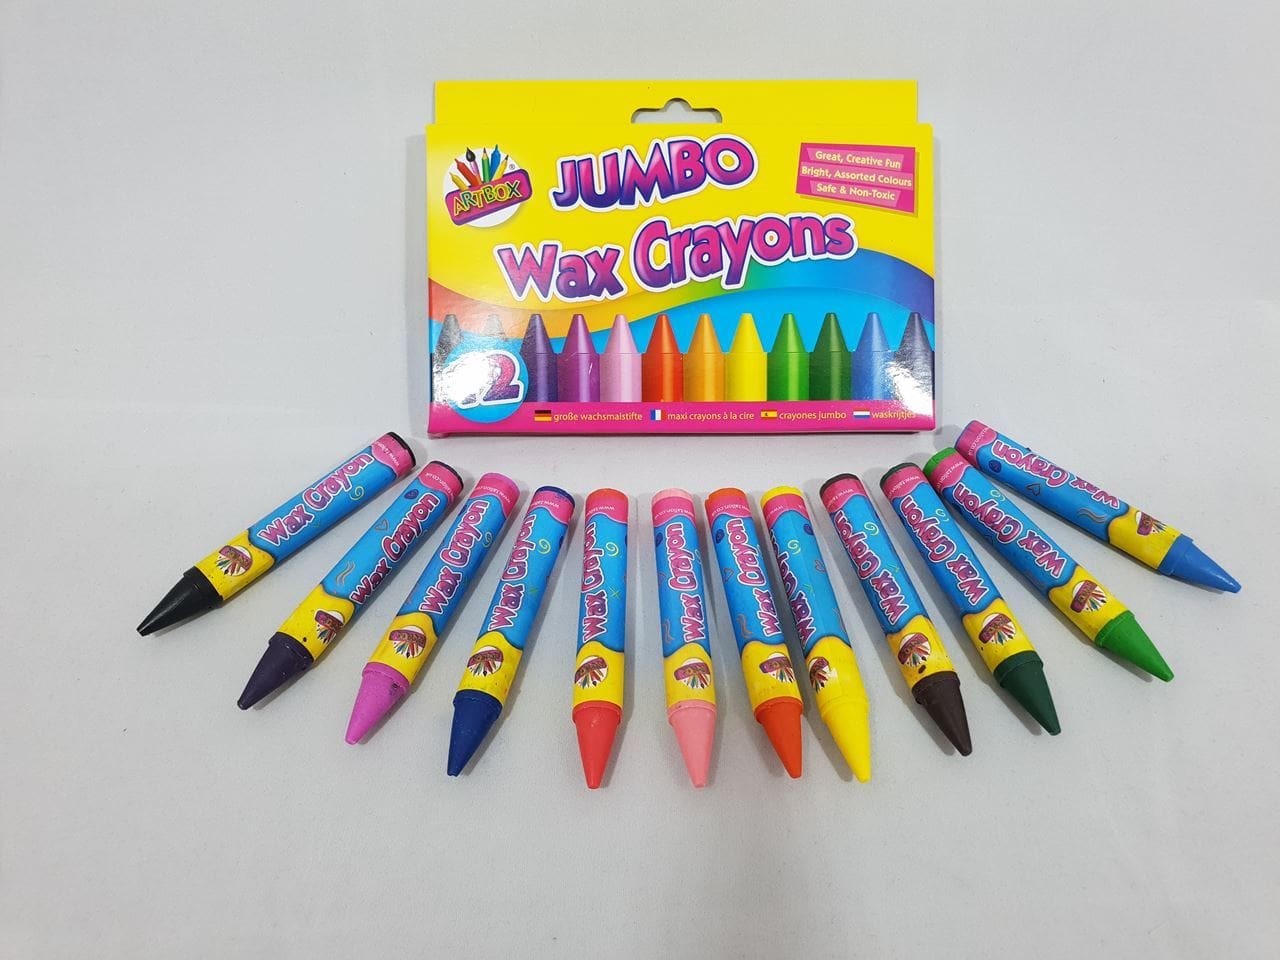 Jumbo Wax Crayons (Pack of 12)